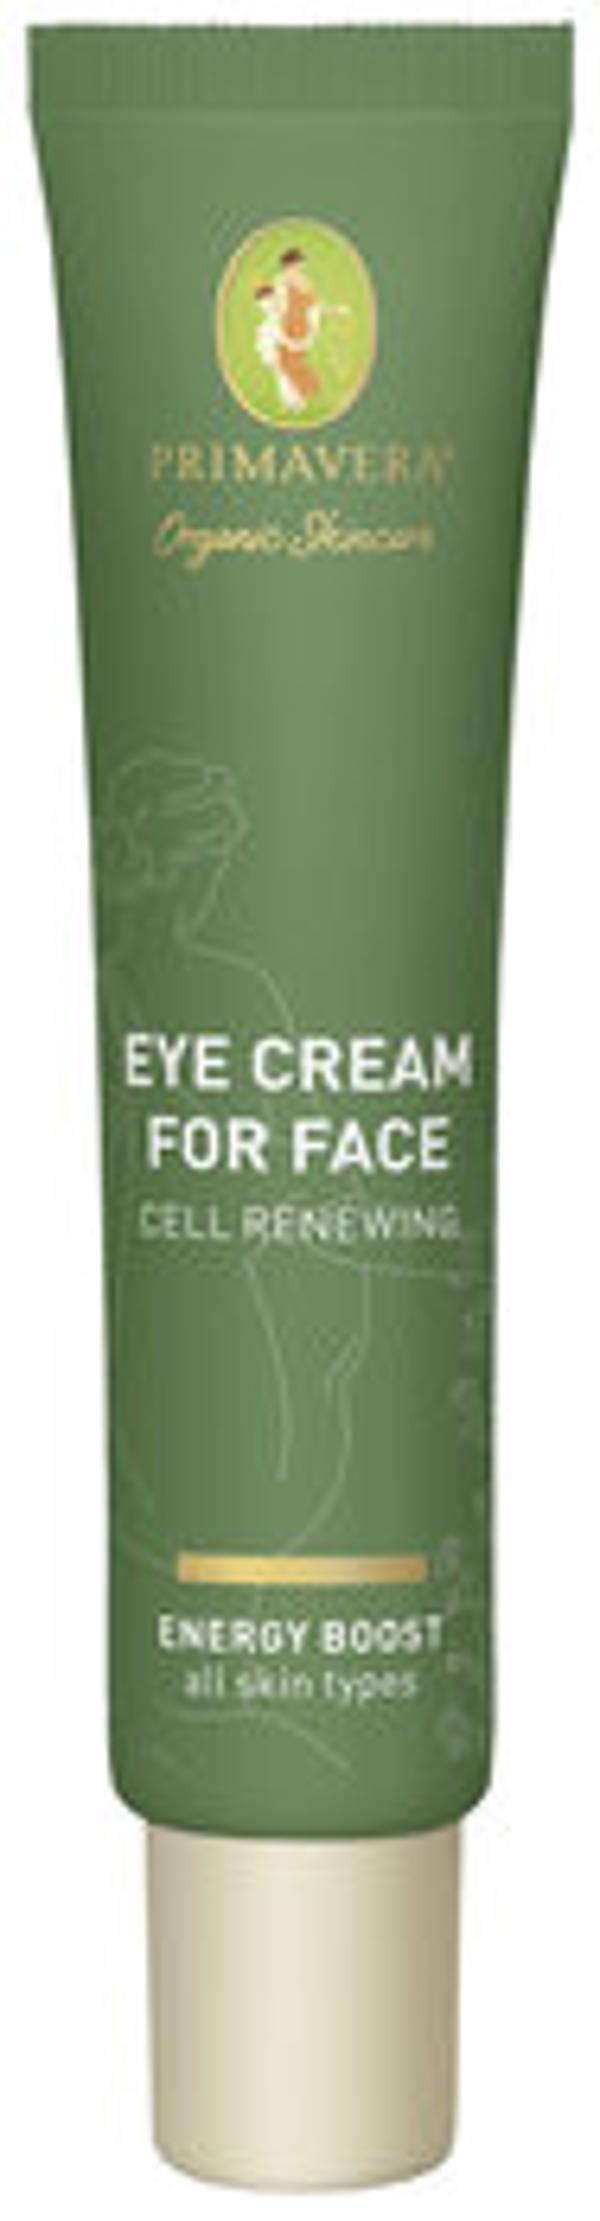 Produktfoto zu Eye Cream Face Cell Renewing, 25 ml